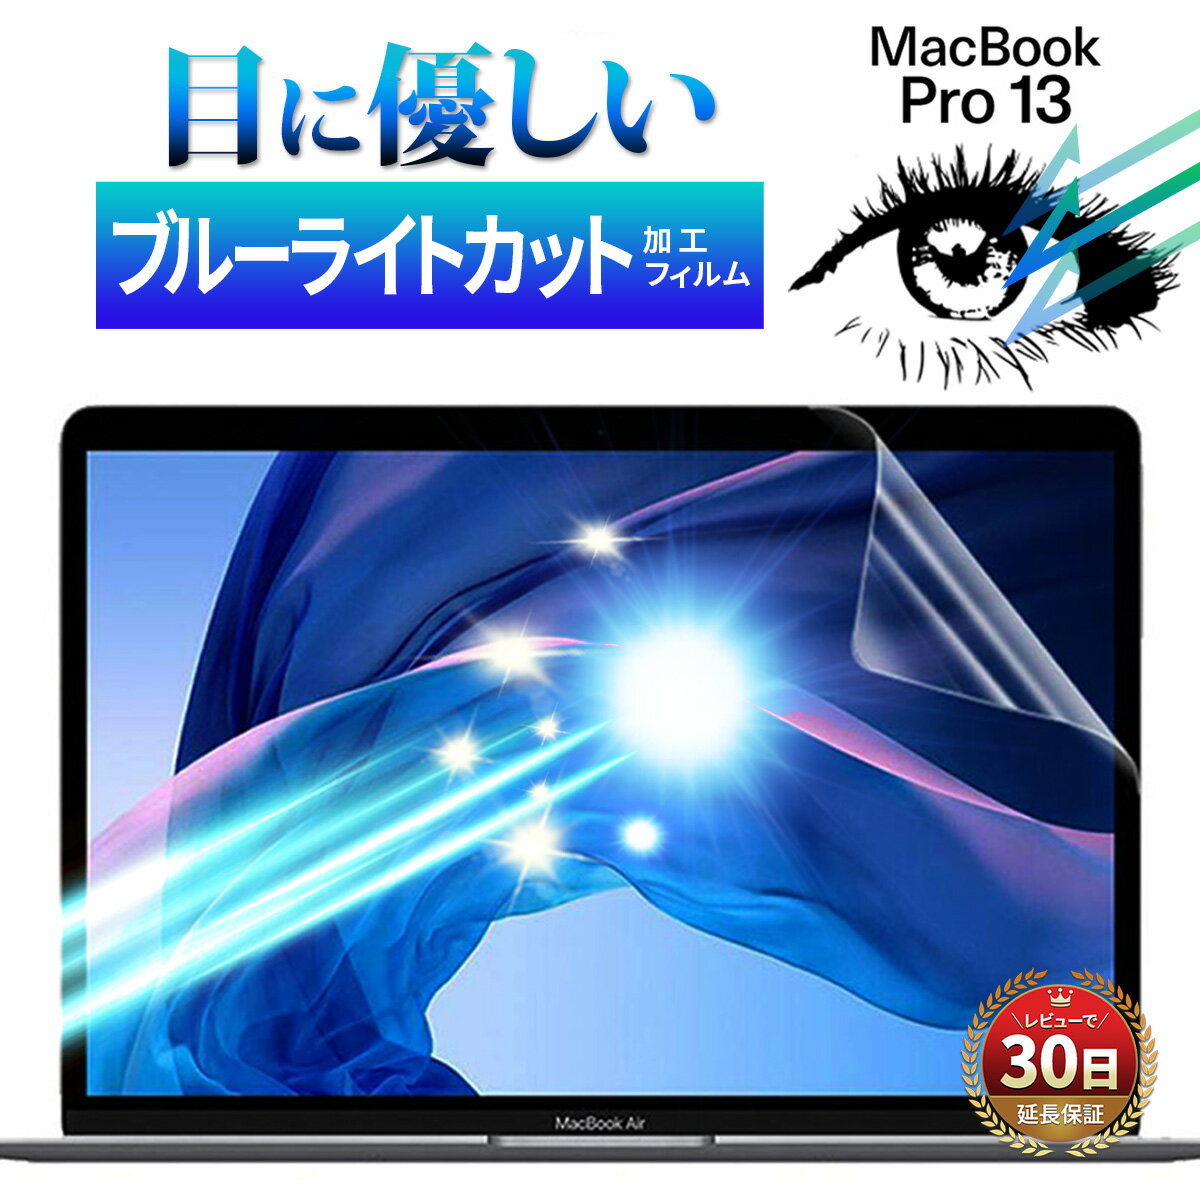 Apple MacBook Pro 13 マックブック プロ ブルーライトカット フィルム 2016 - 2020 年 A1706 A1708 A1989 A2159 A2338 デスク ワーク 液晶 画面 保護 画面フィルム 保護フィルム 指紋 スクラッチ 防止 HD クリア 透明